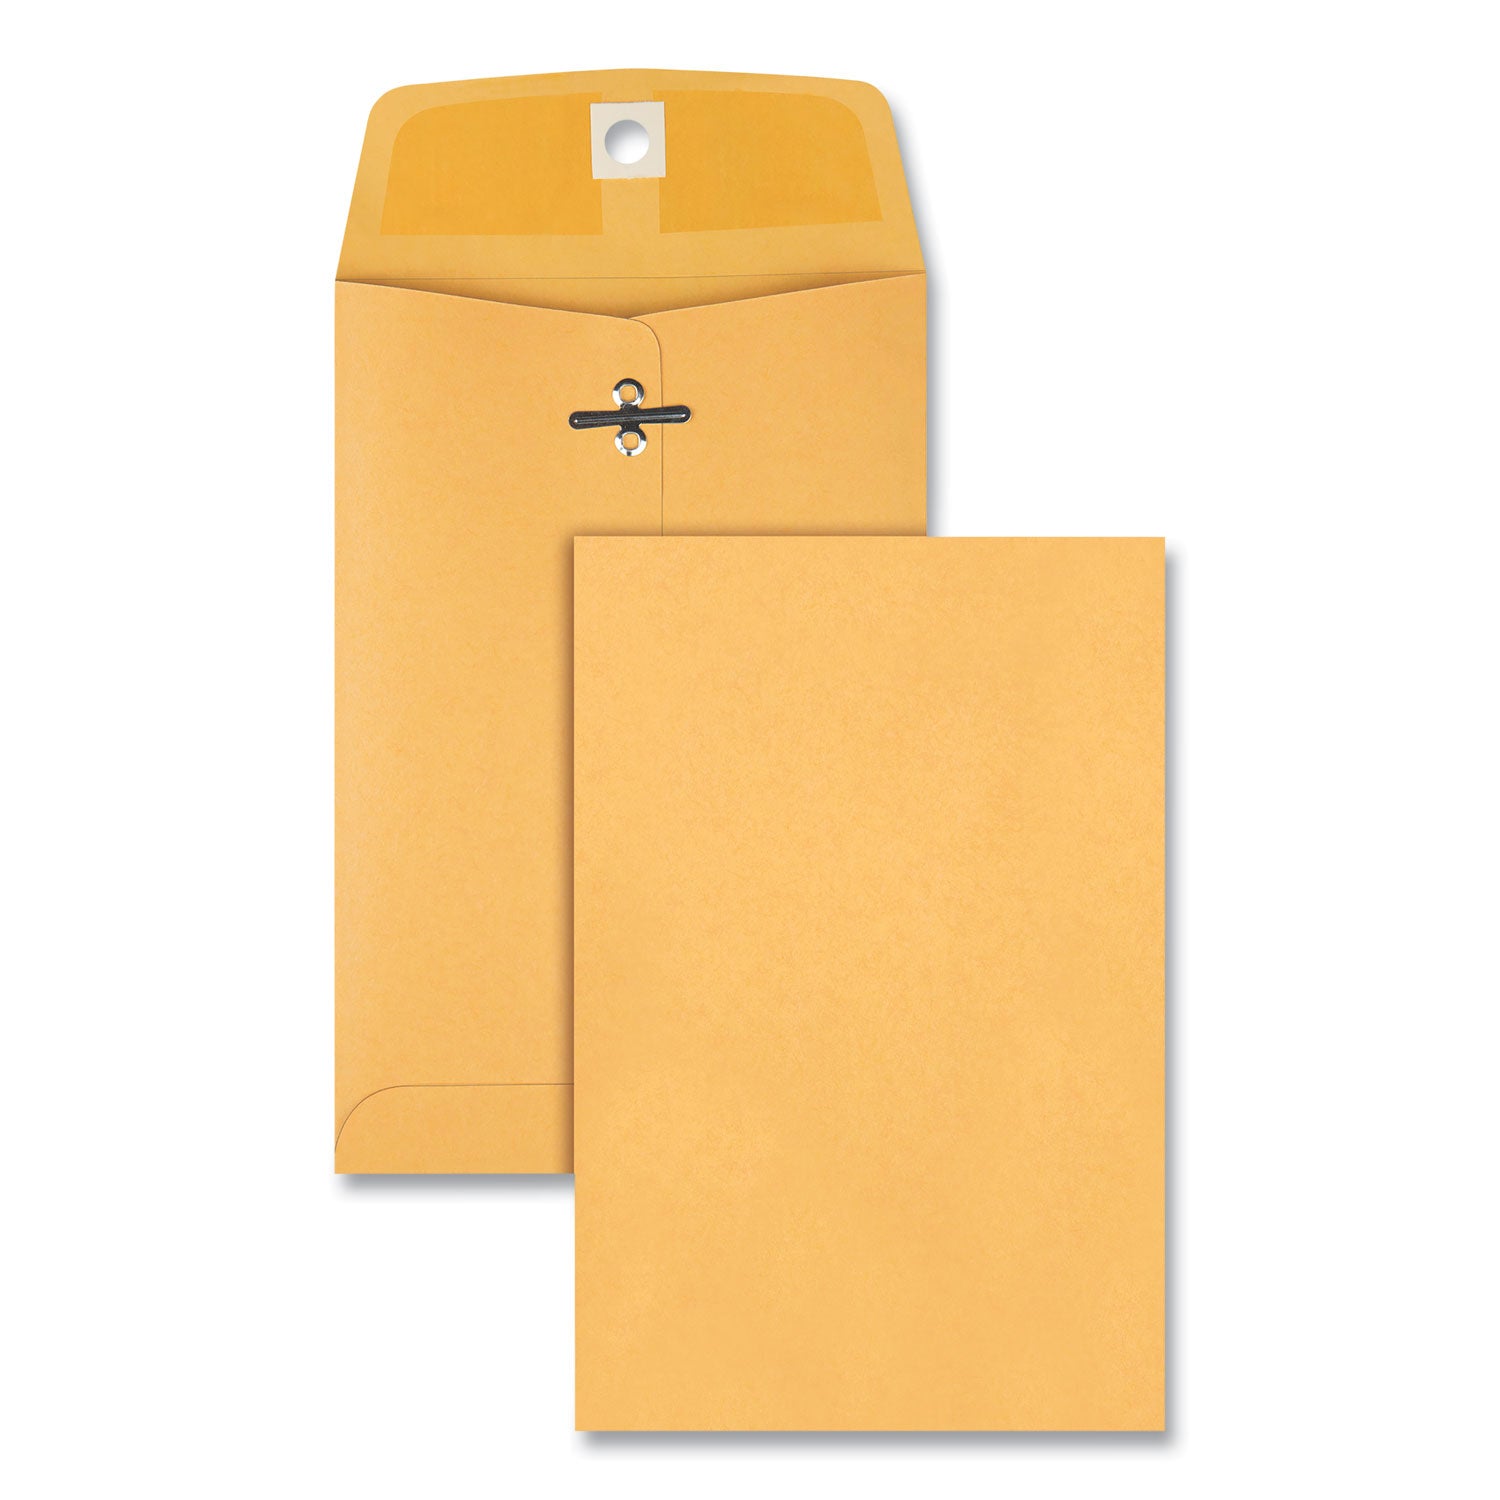 Clasp Envelope, 28 lb Bond Weight Kraft, #35, Square Flap, Clasp/Gummed Closure, 5 x 7.5, Brown Kraft, 100/Box - 